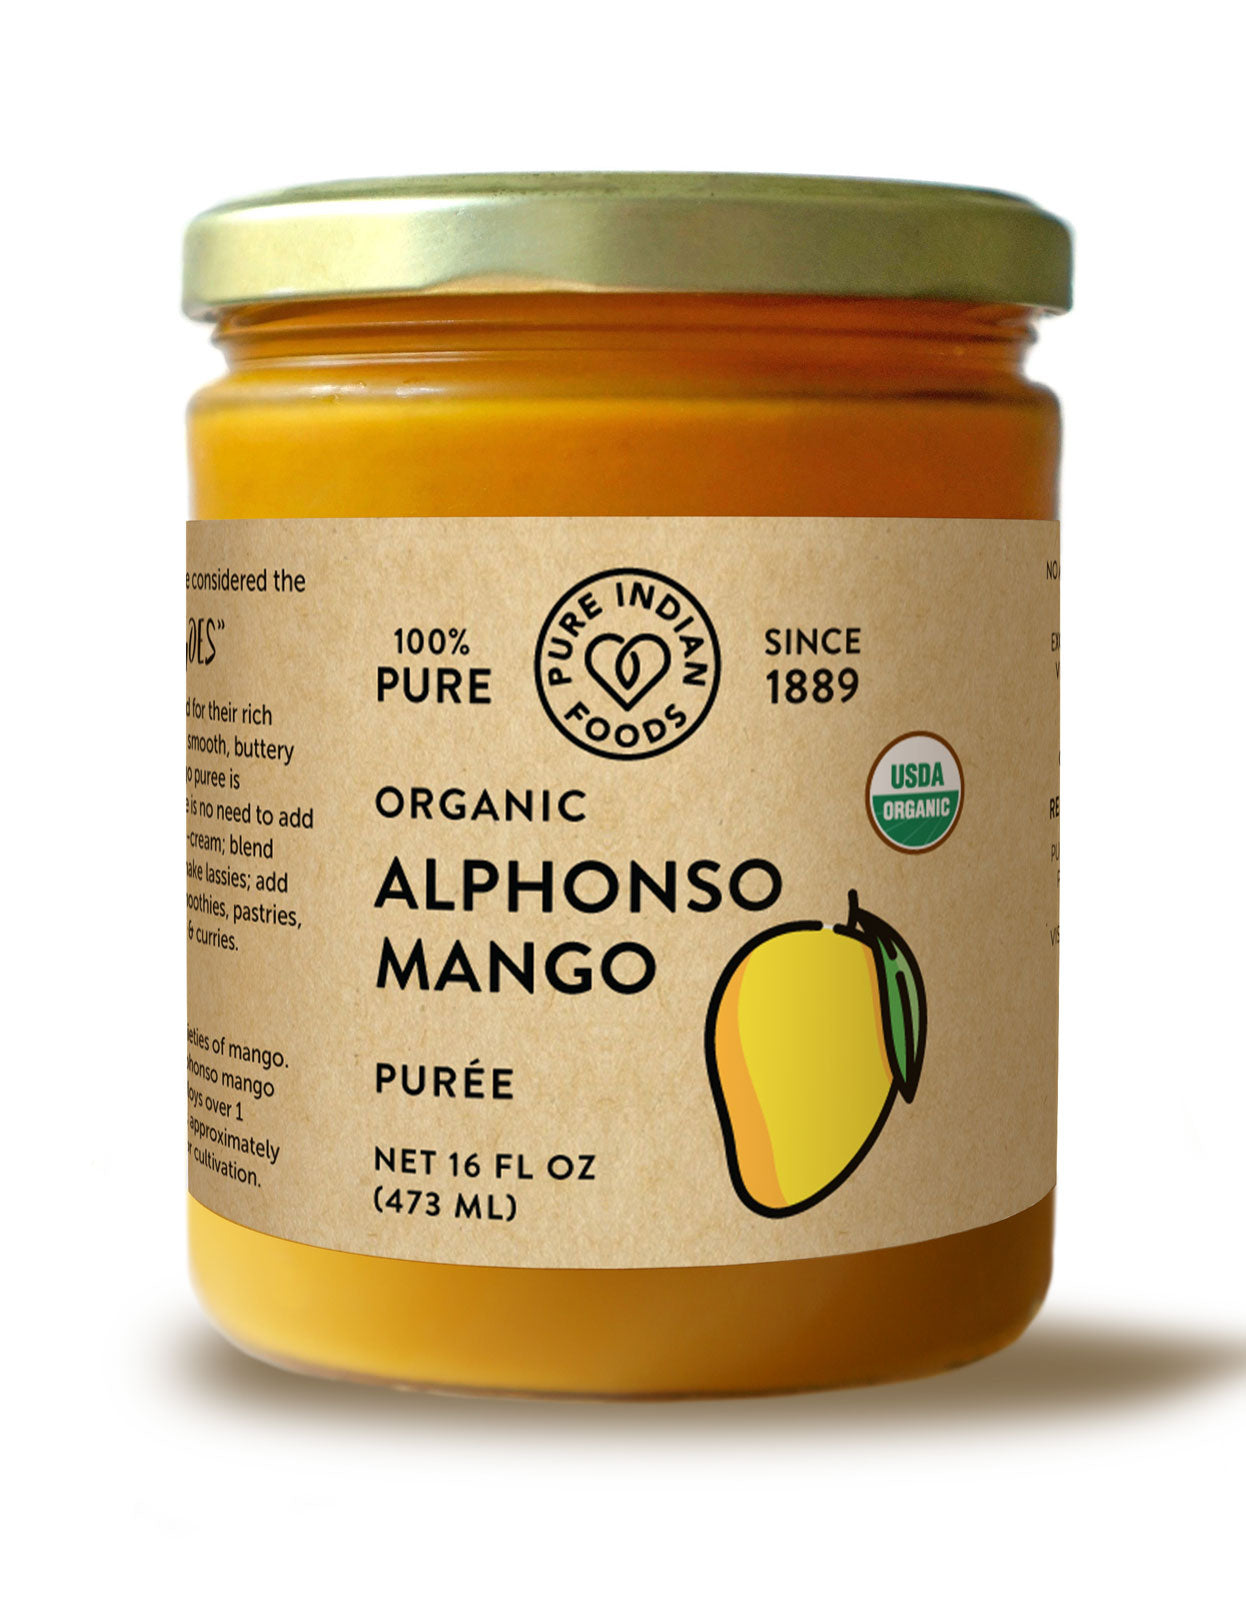 jar of organic alphonso mango puree containing 100% pure organic mango pulp